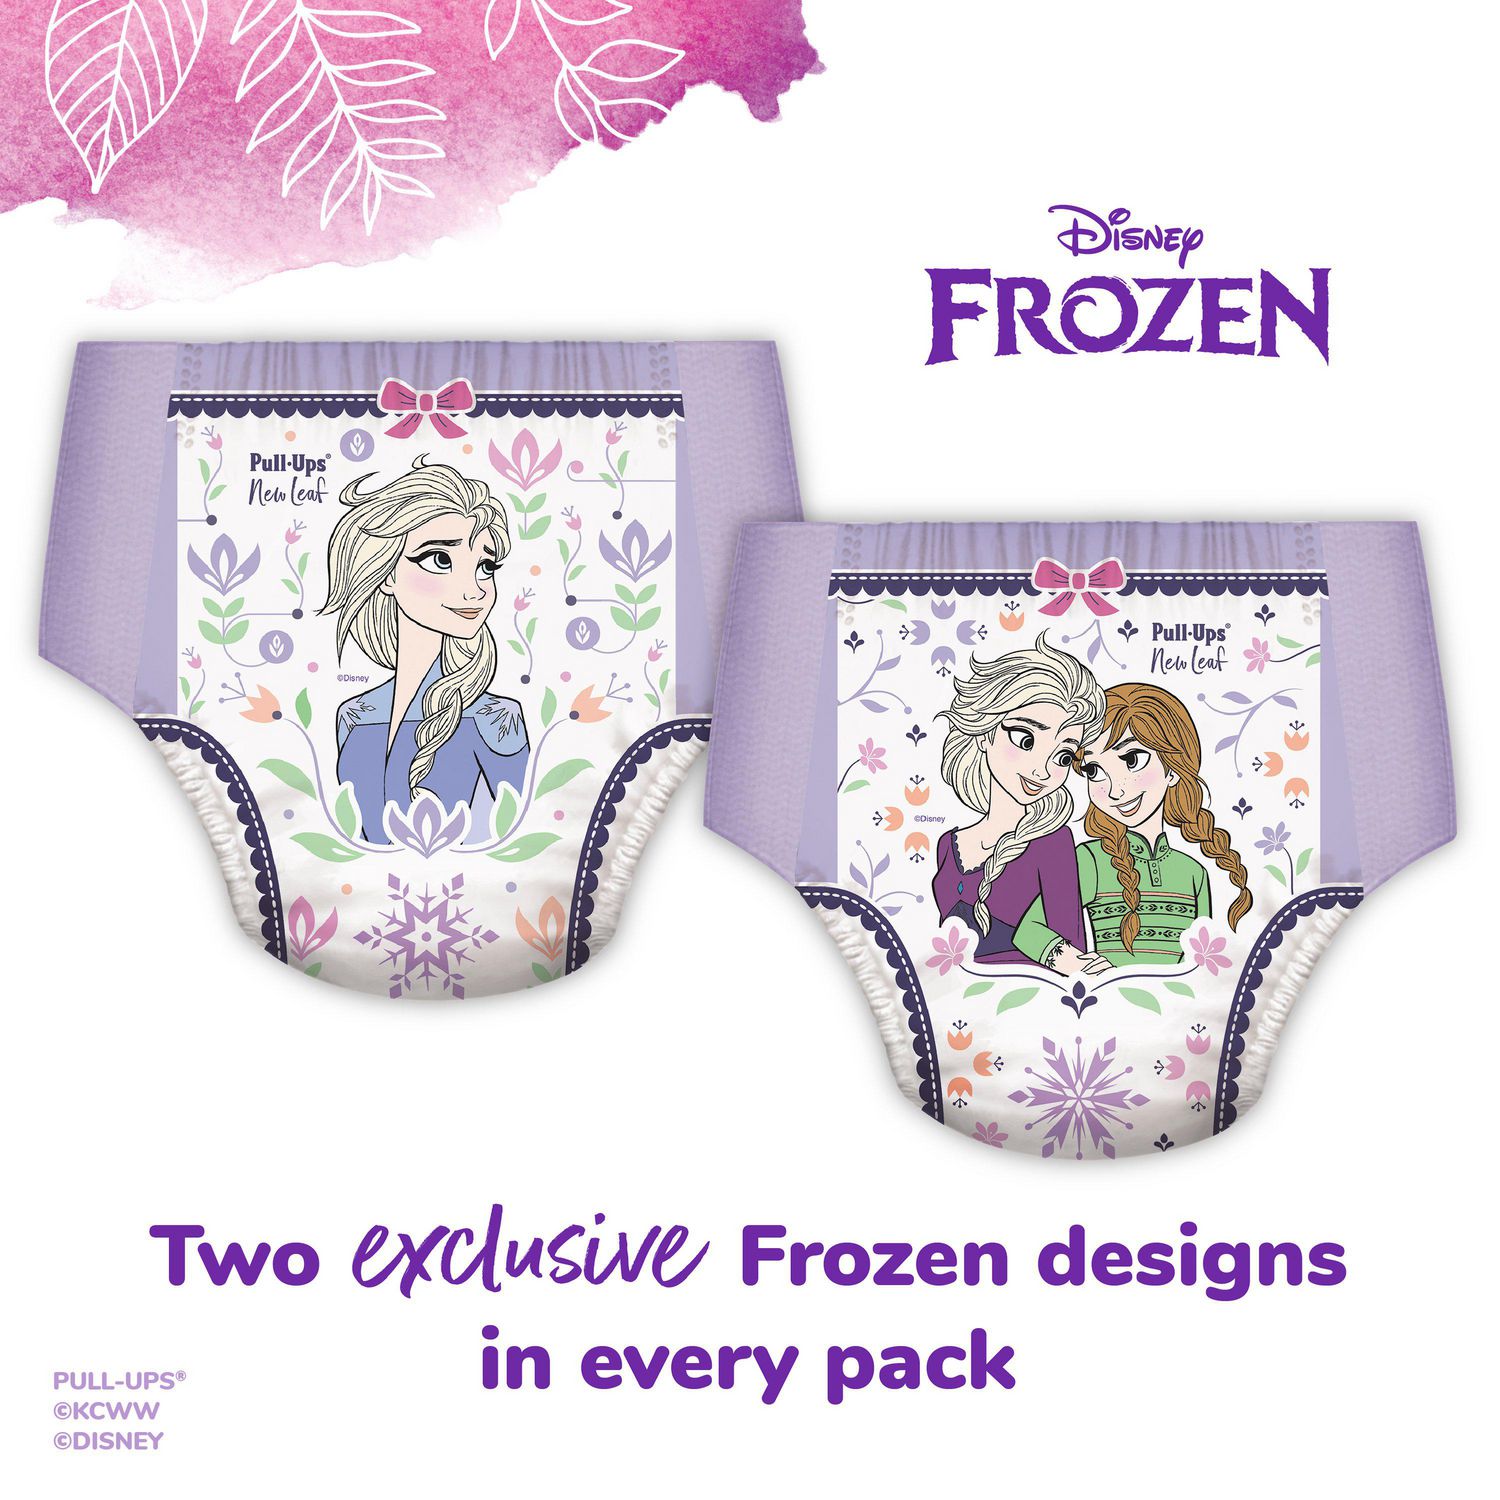  Pull-Ups New Leaf Girls' Disney Frozen Potty Training Pants, 4T-5T  (38-50 lbs), 60 Ct : Baby